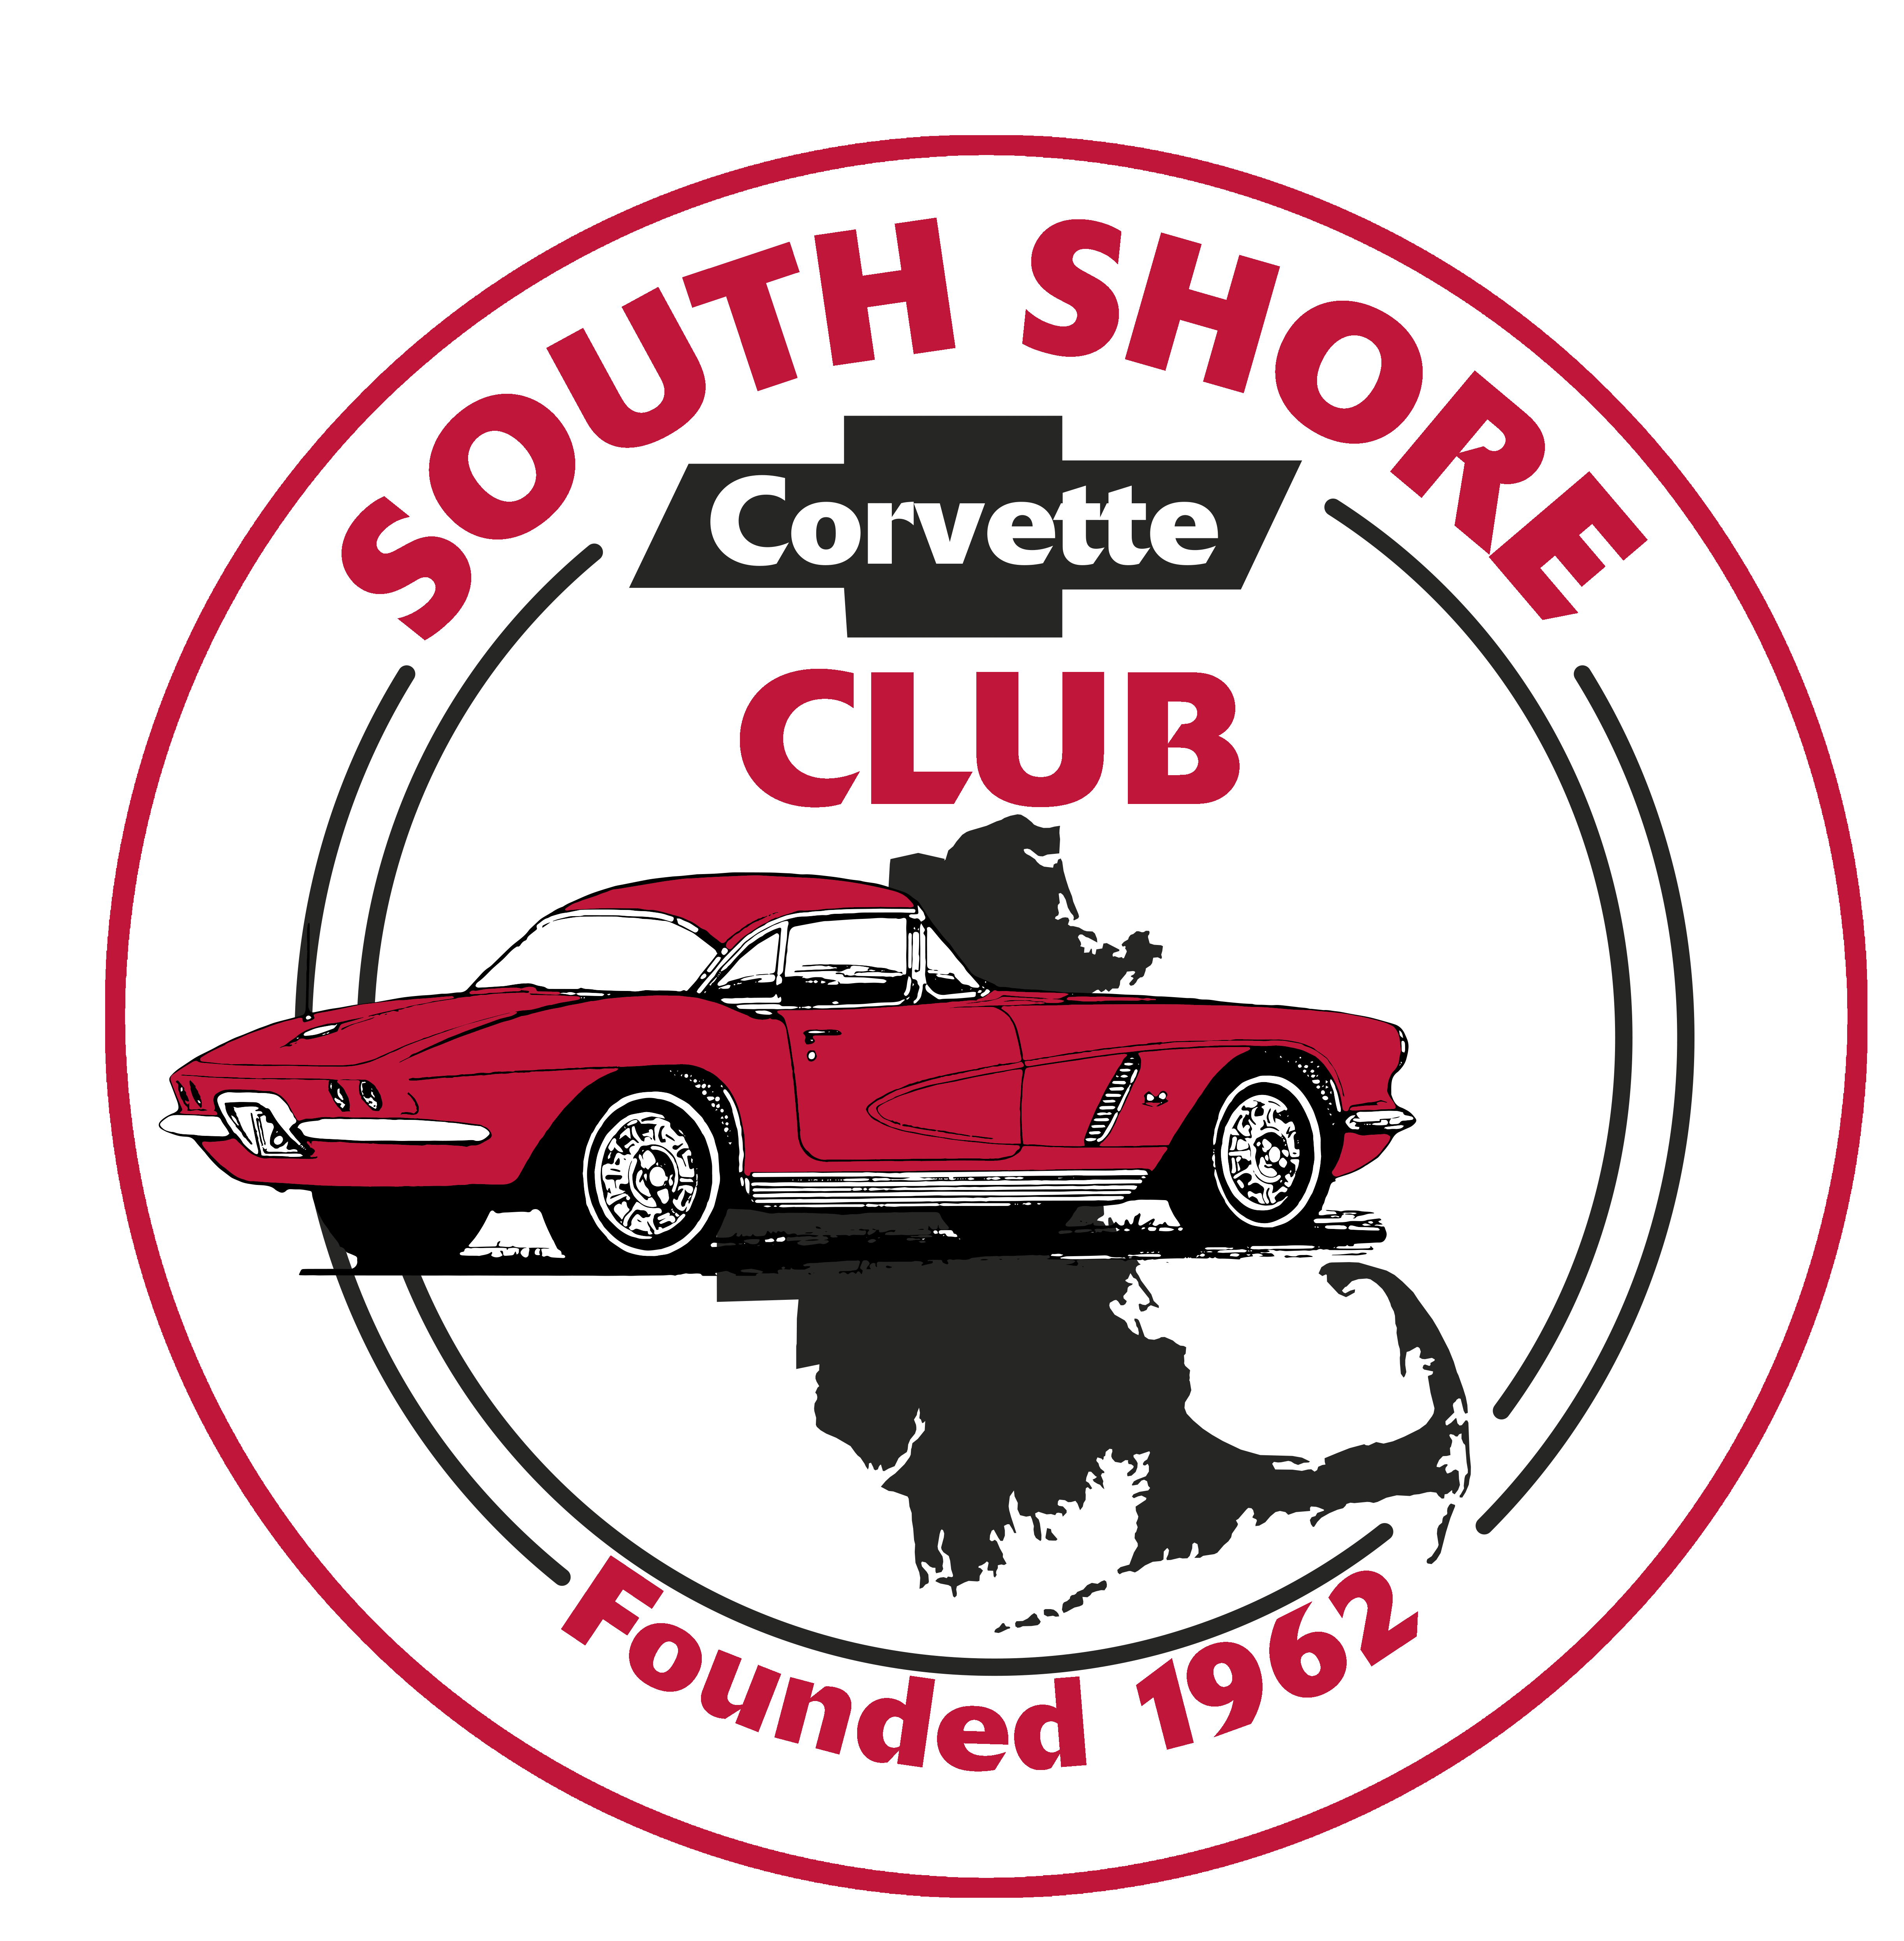 South Shore Corvette Club